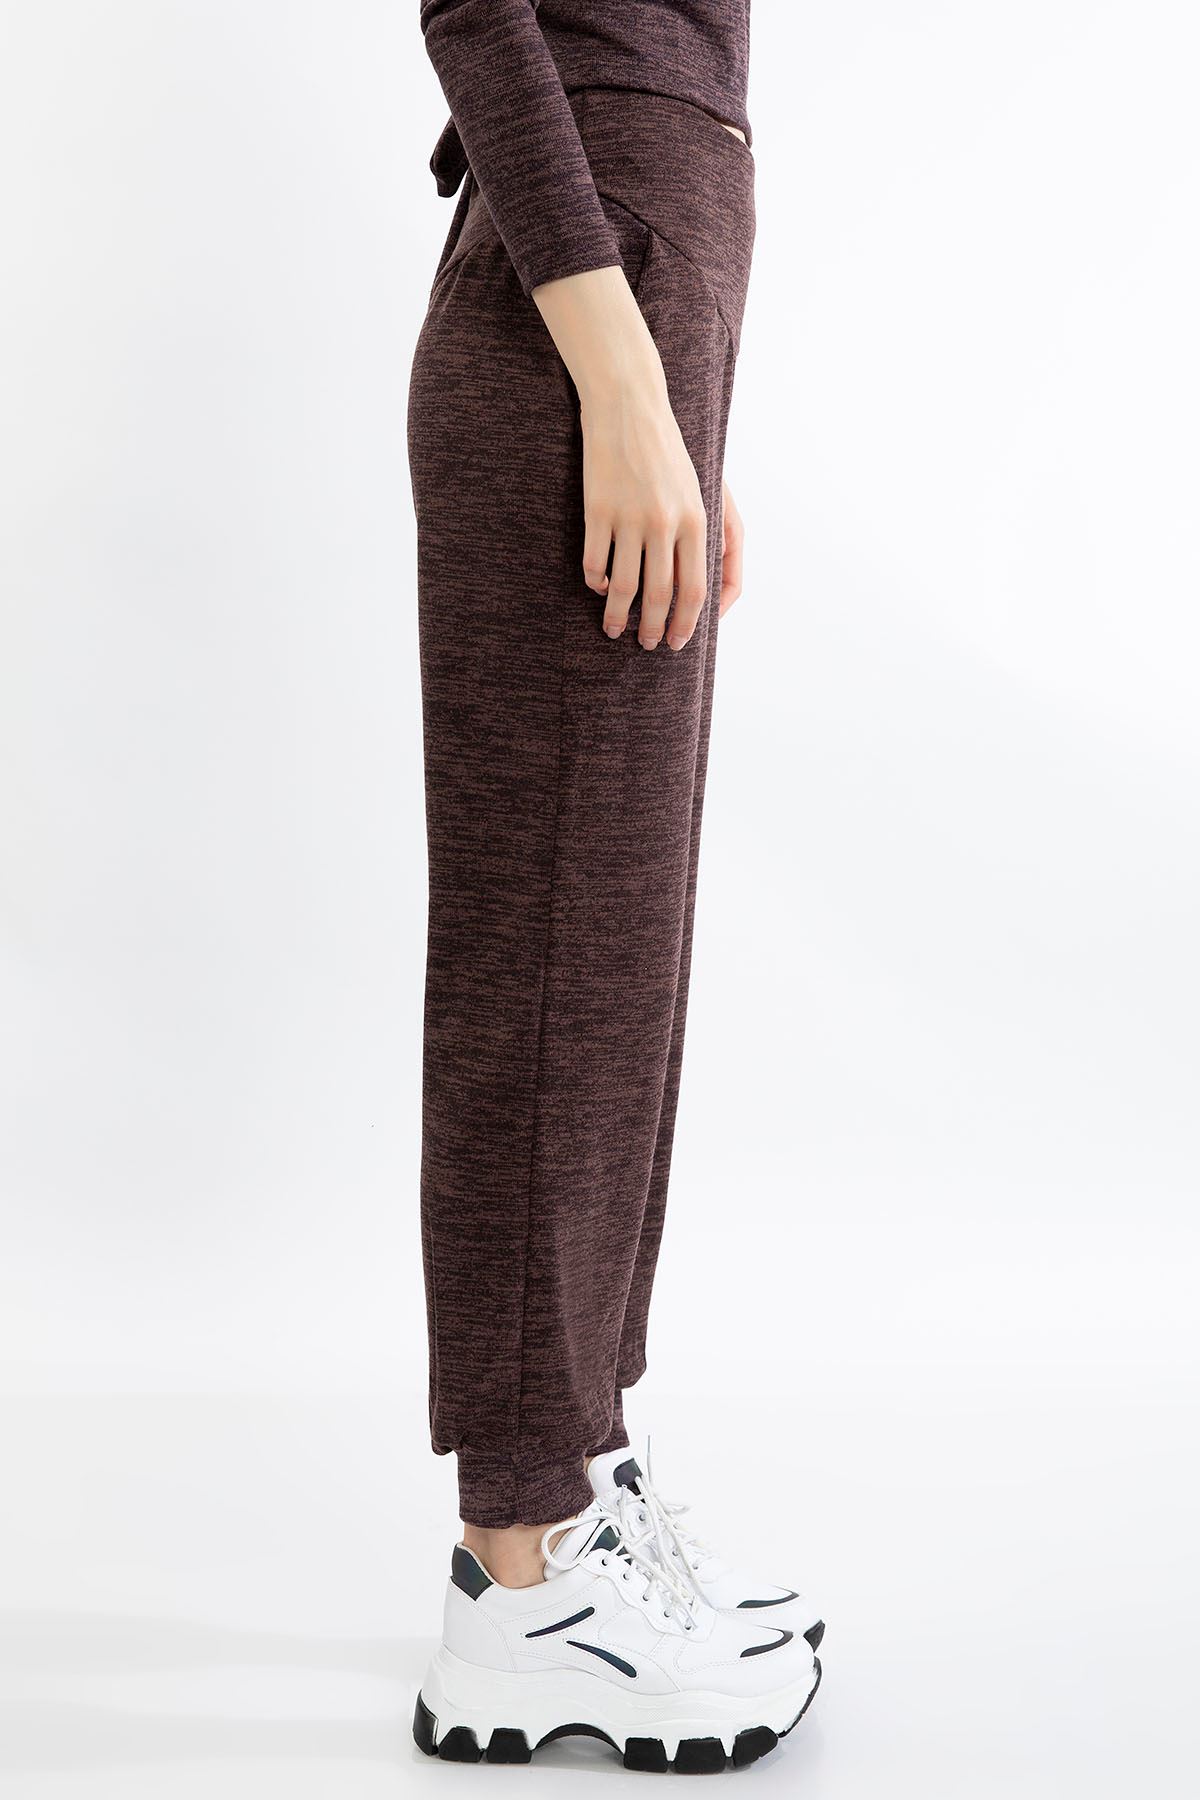 Melange Fabric Long Comfy Fit Gray Women'S Trouser - Brick 